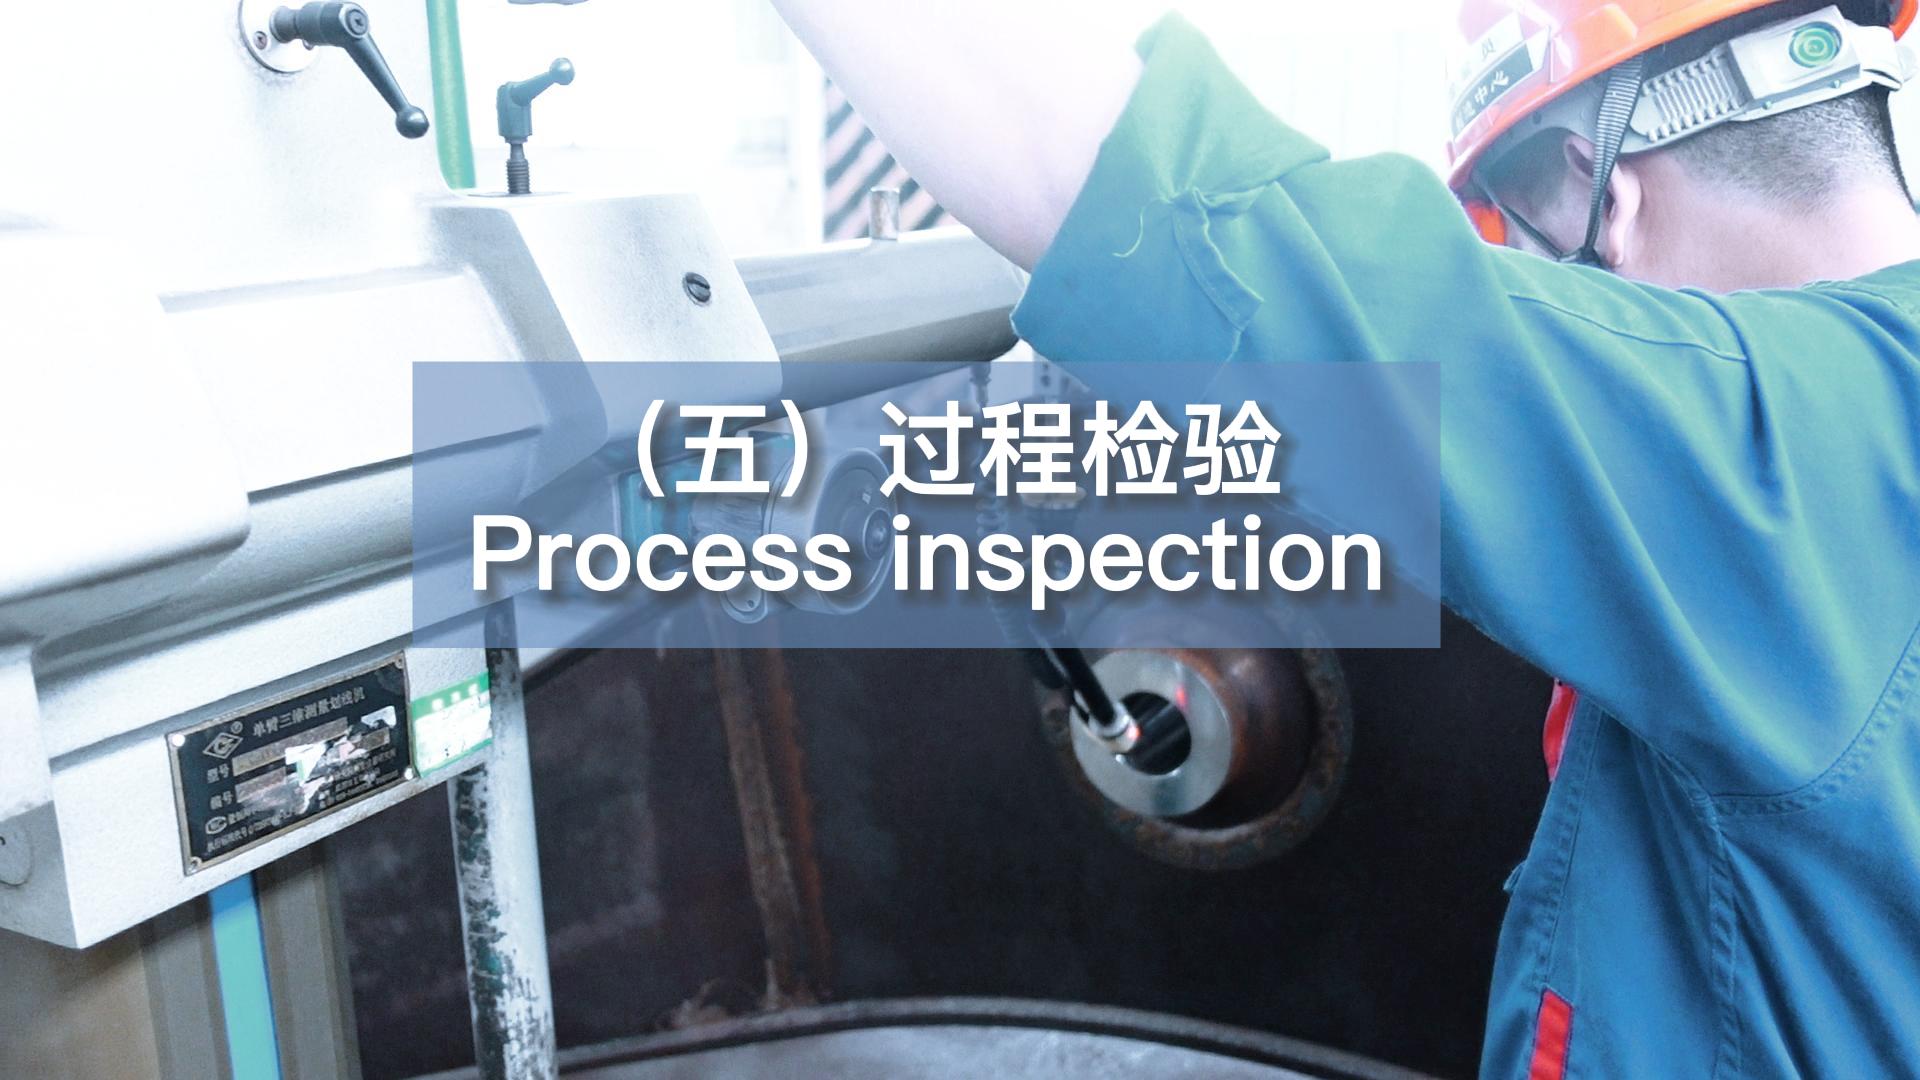 Process inspection